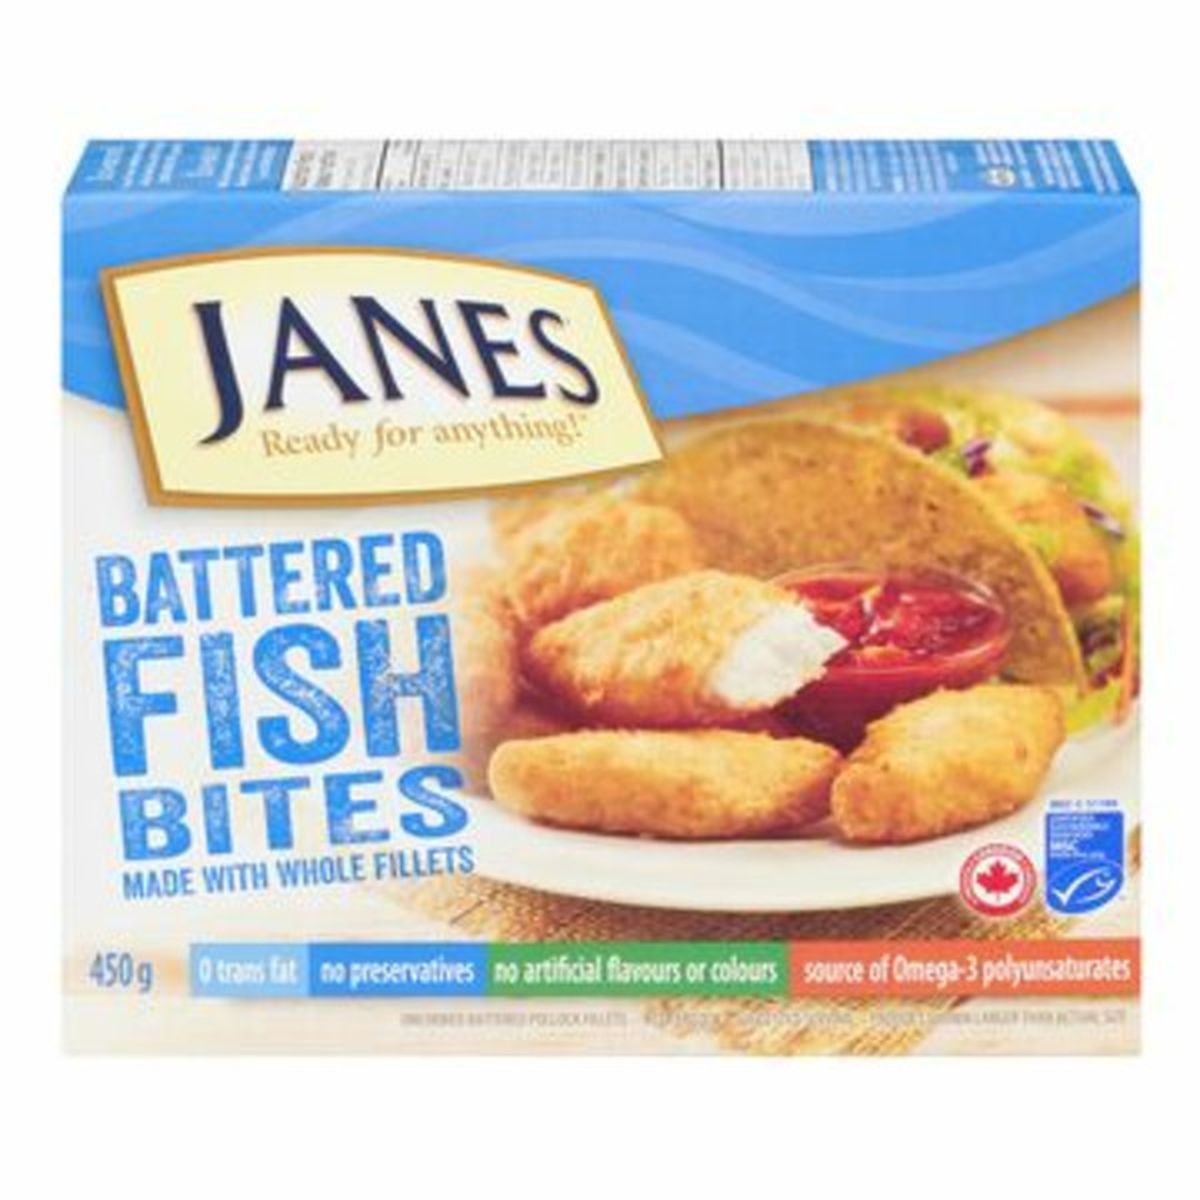 Janes Battered Fish Bites (450 g) Delivery or Pickup Near Me - Instacart